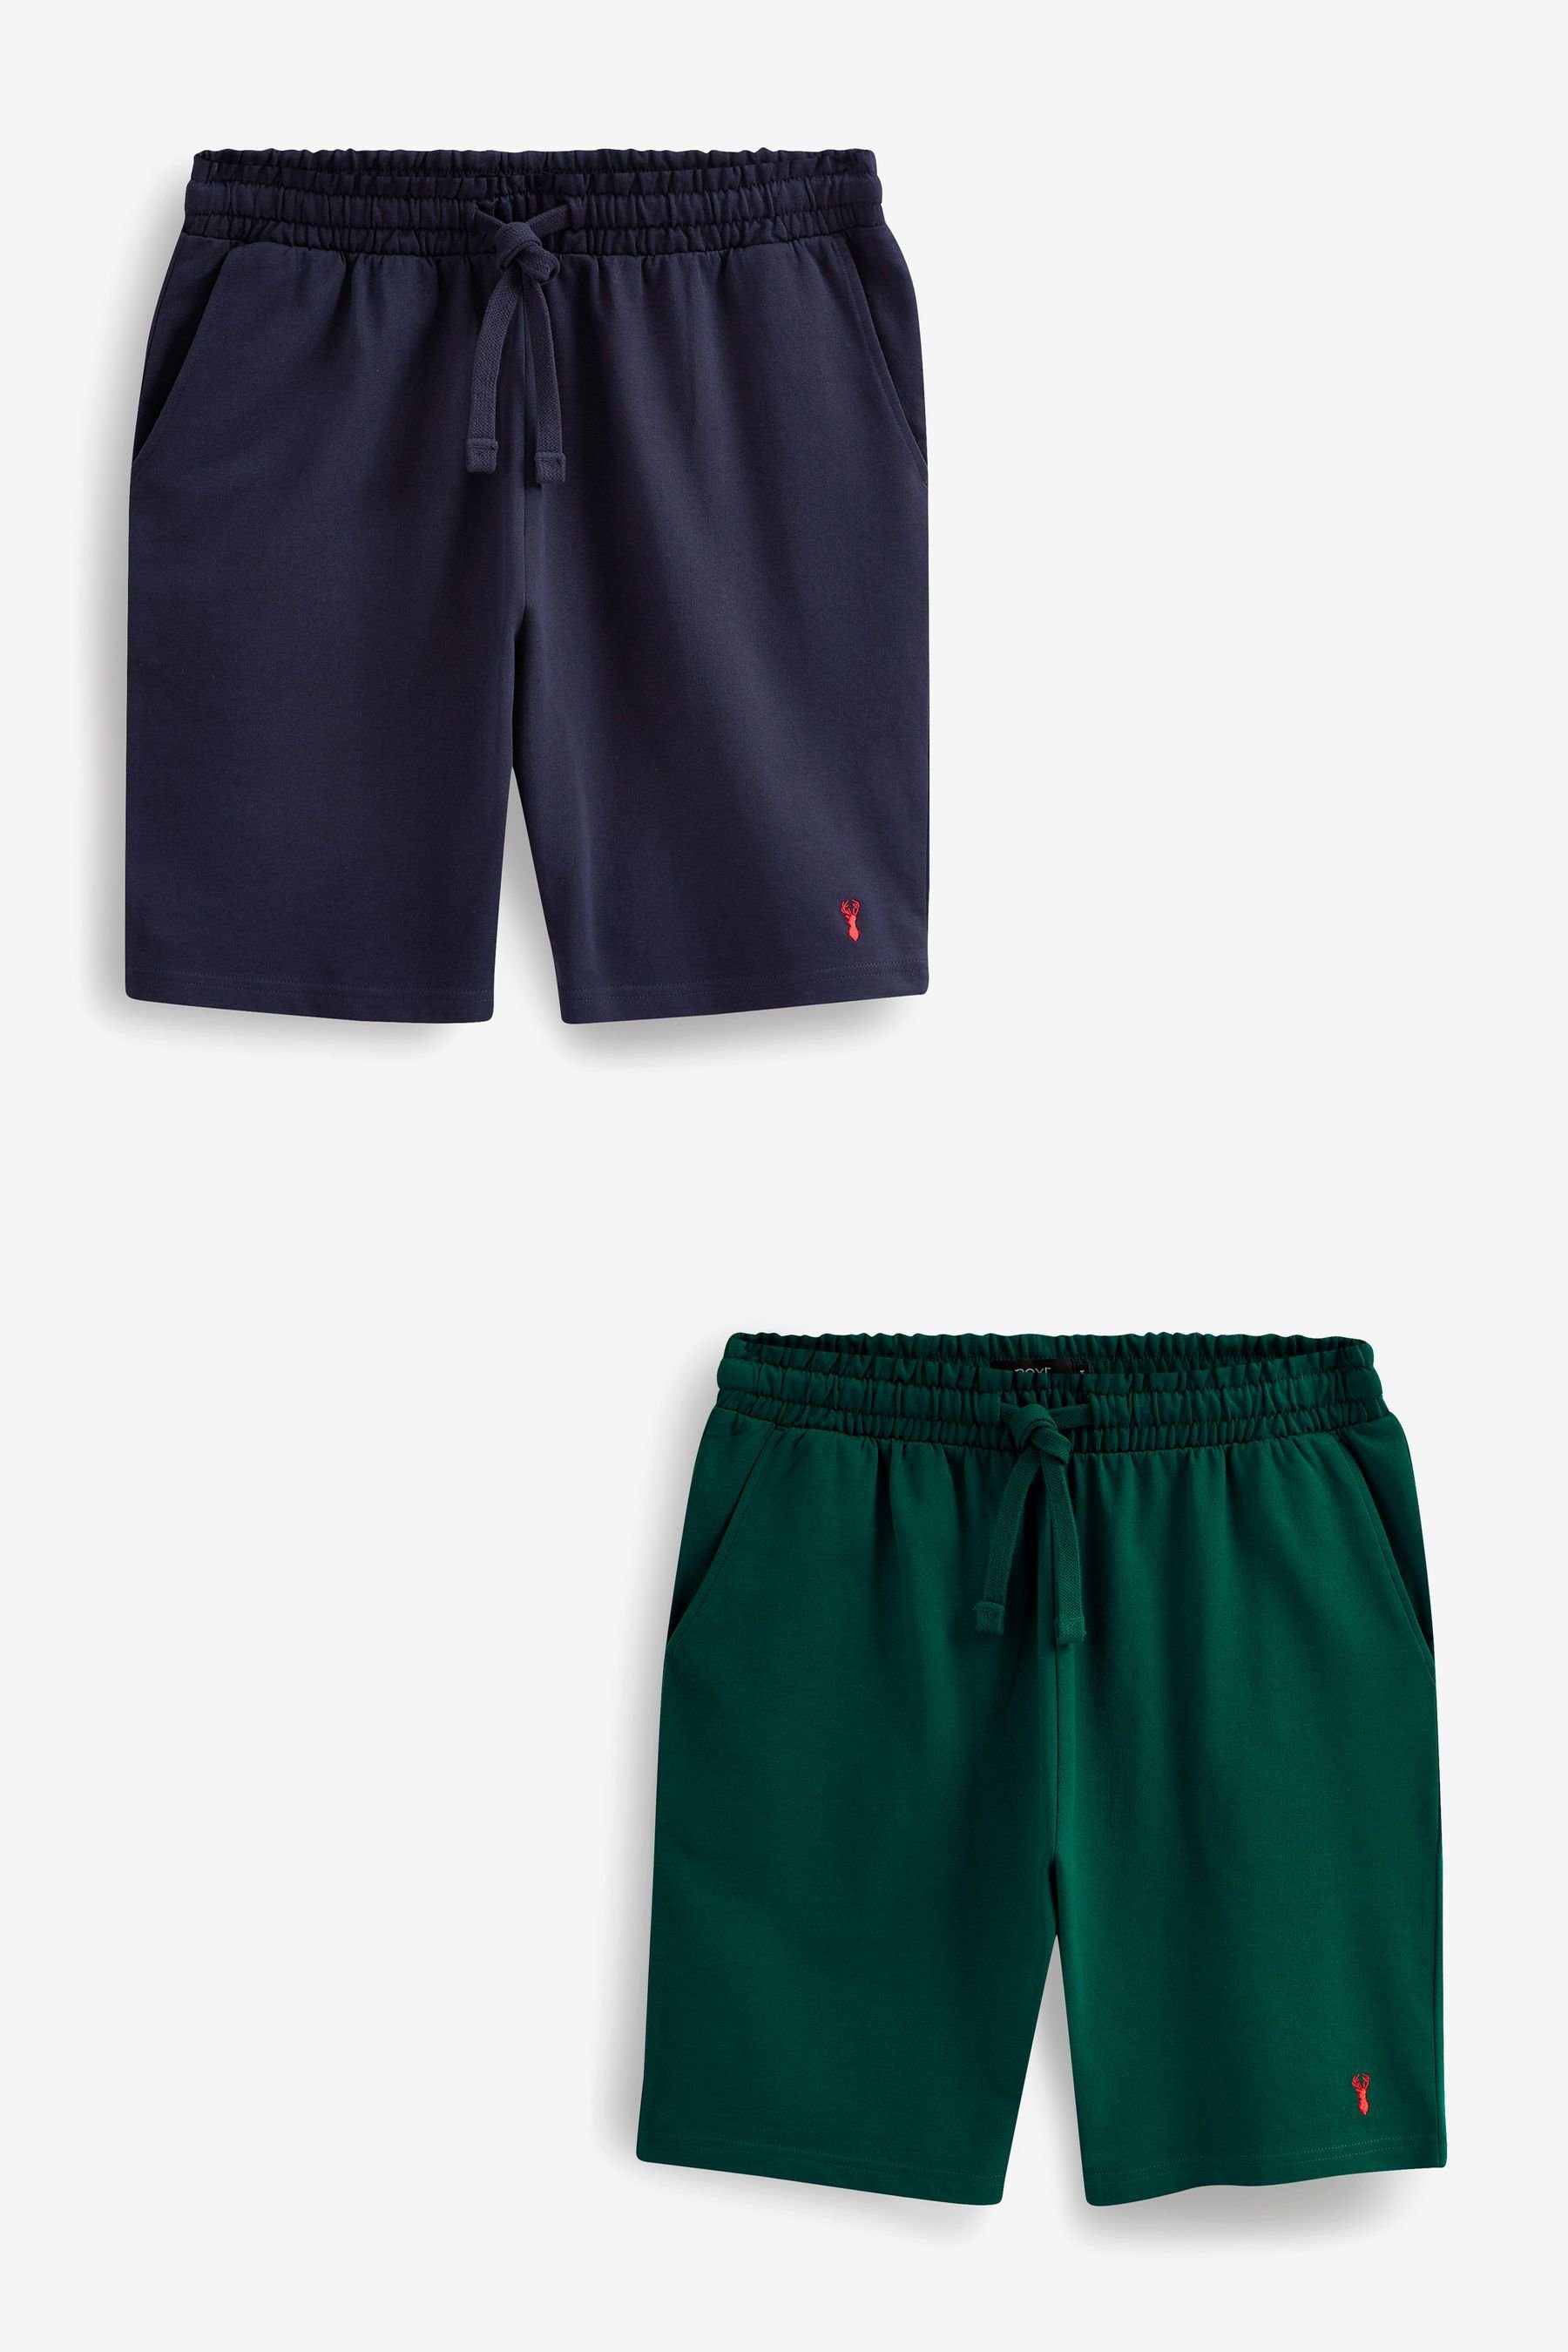 Green/Navy Next Blue Leichte Schlafshorts Shorts, 2er-Pack (2-tlg)